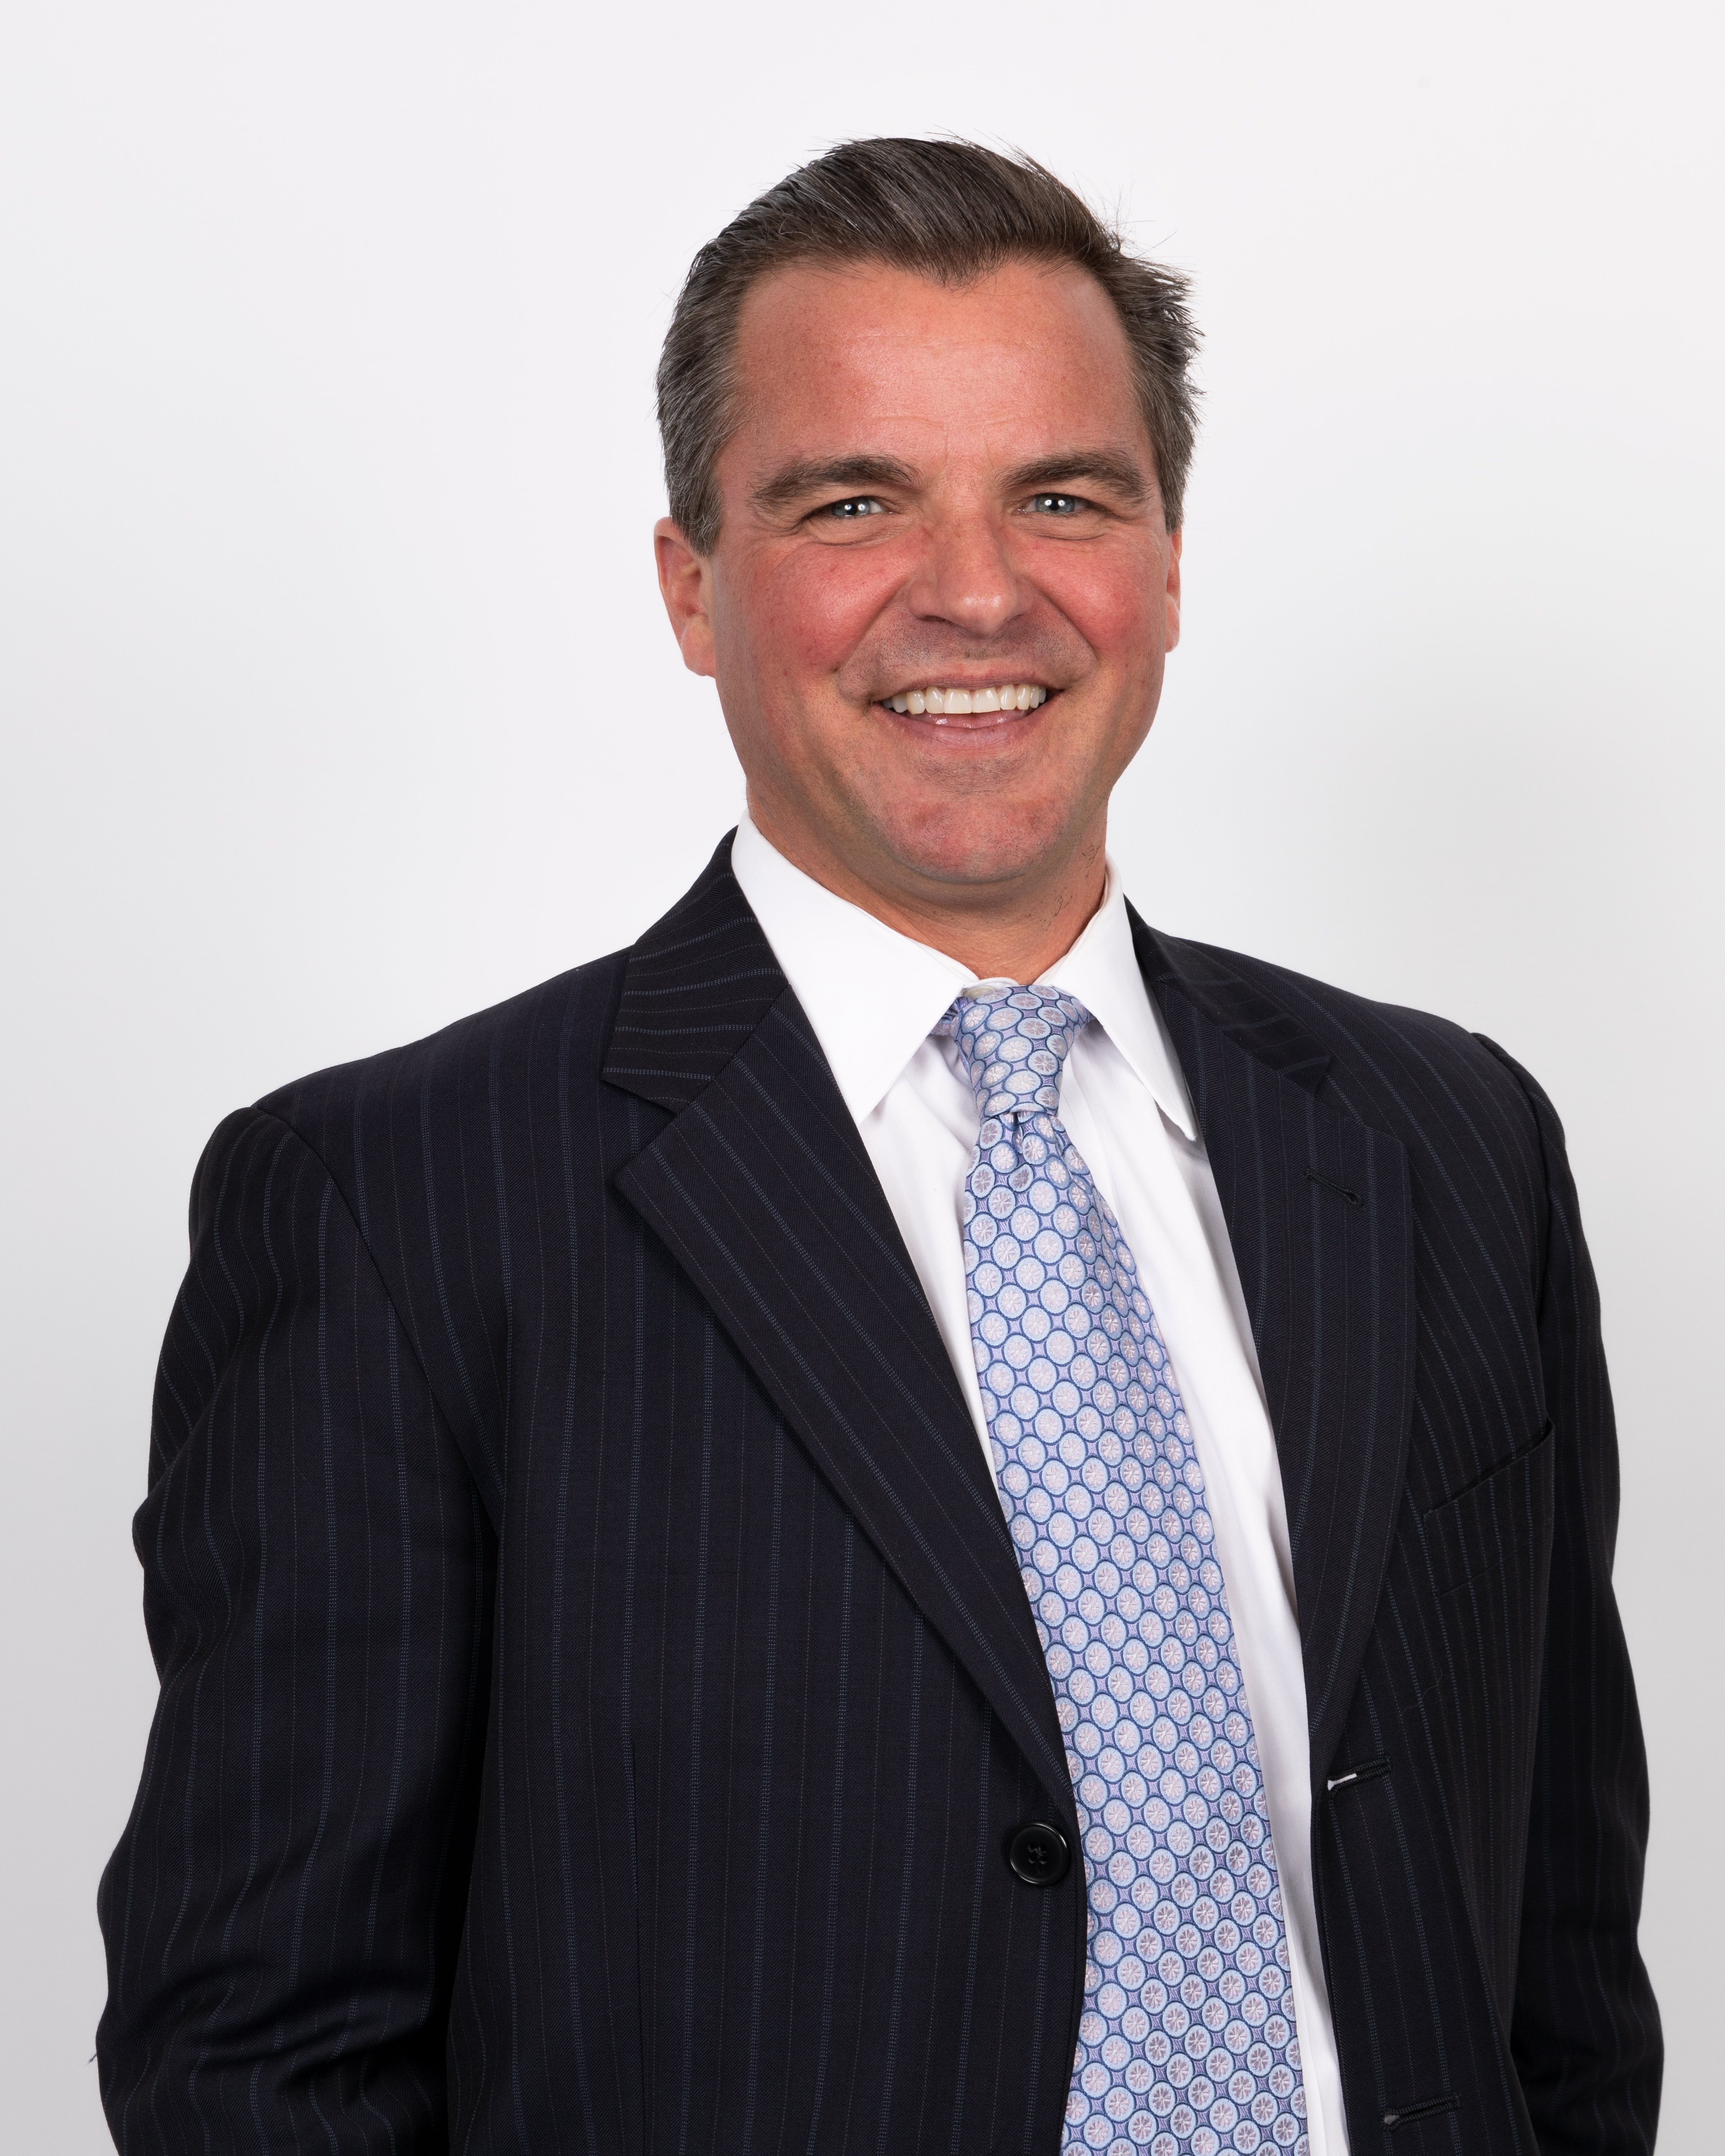 Curt Meyer Managing Director — Sales & Marketing